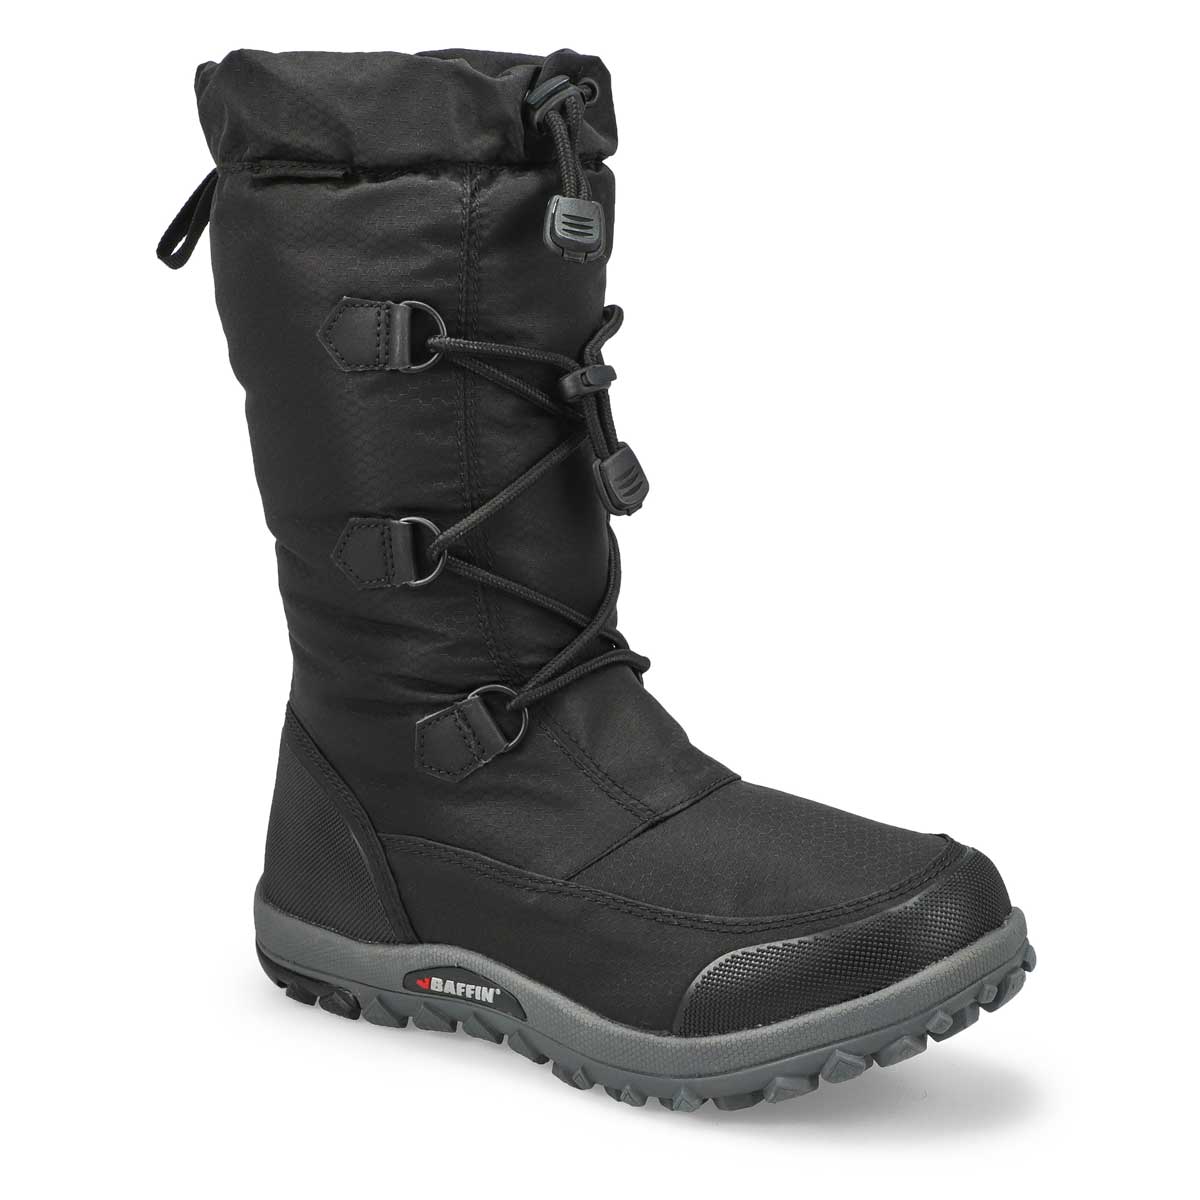 Women's Light Waterproof Winter Boot - Black